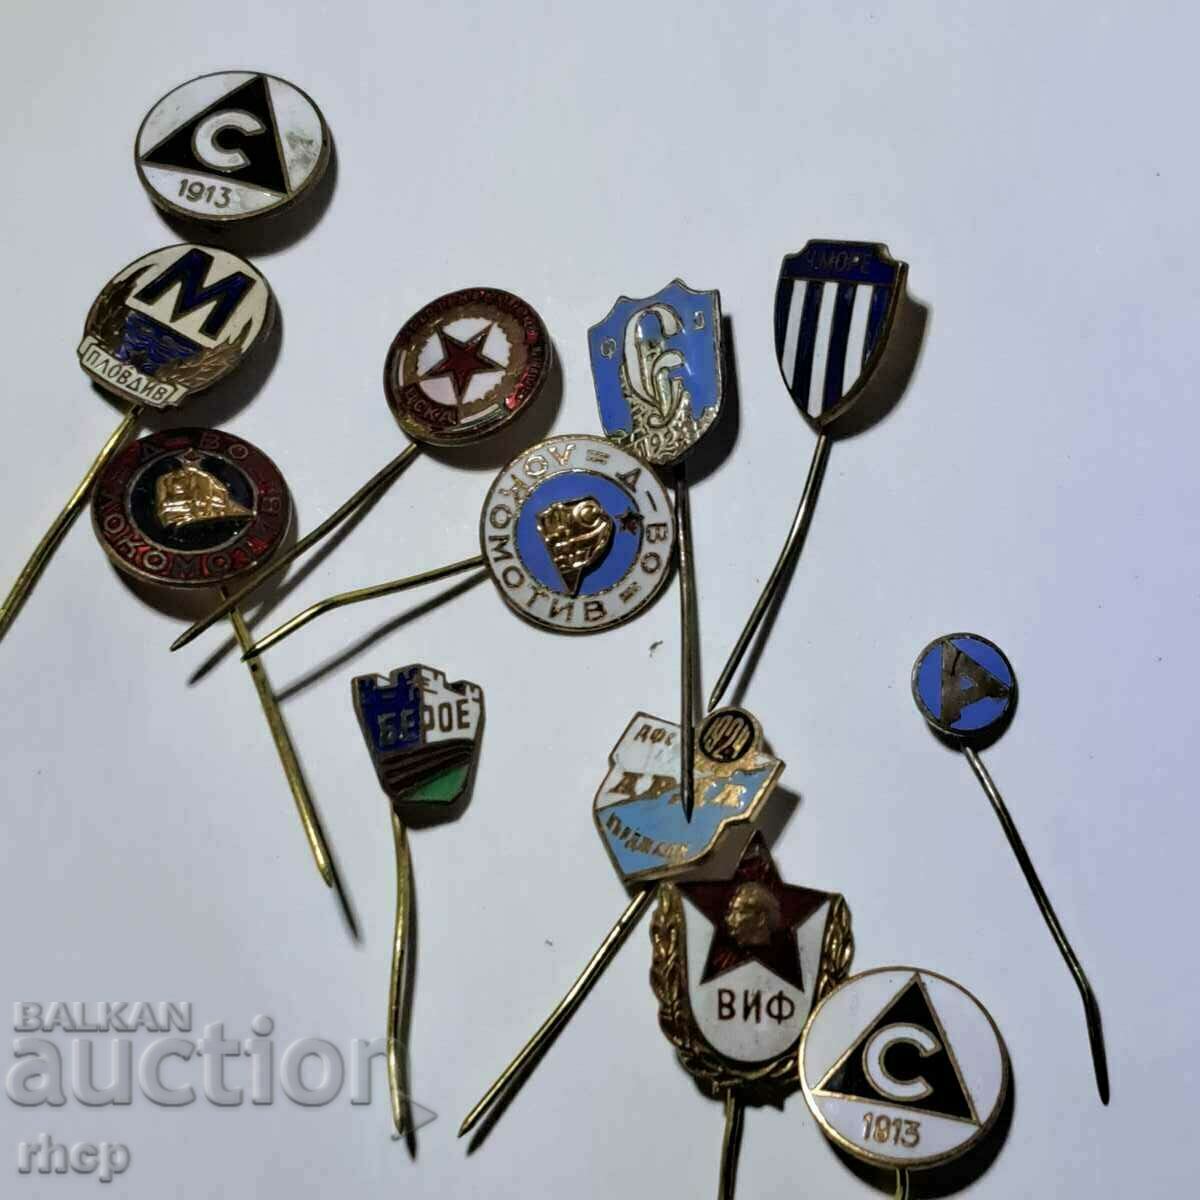 Lot of football old Bulgarian enamel badges